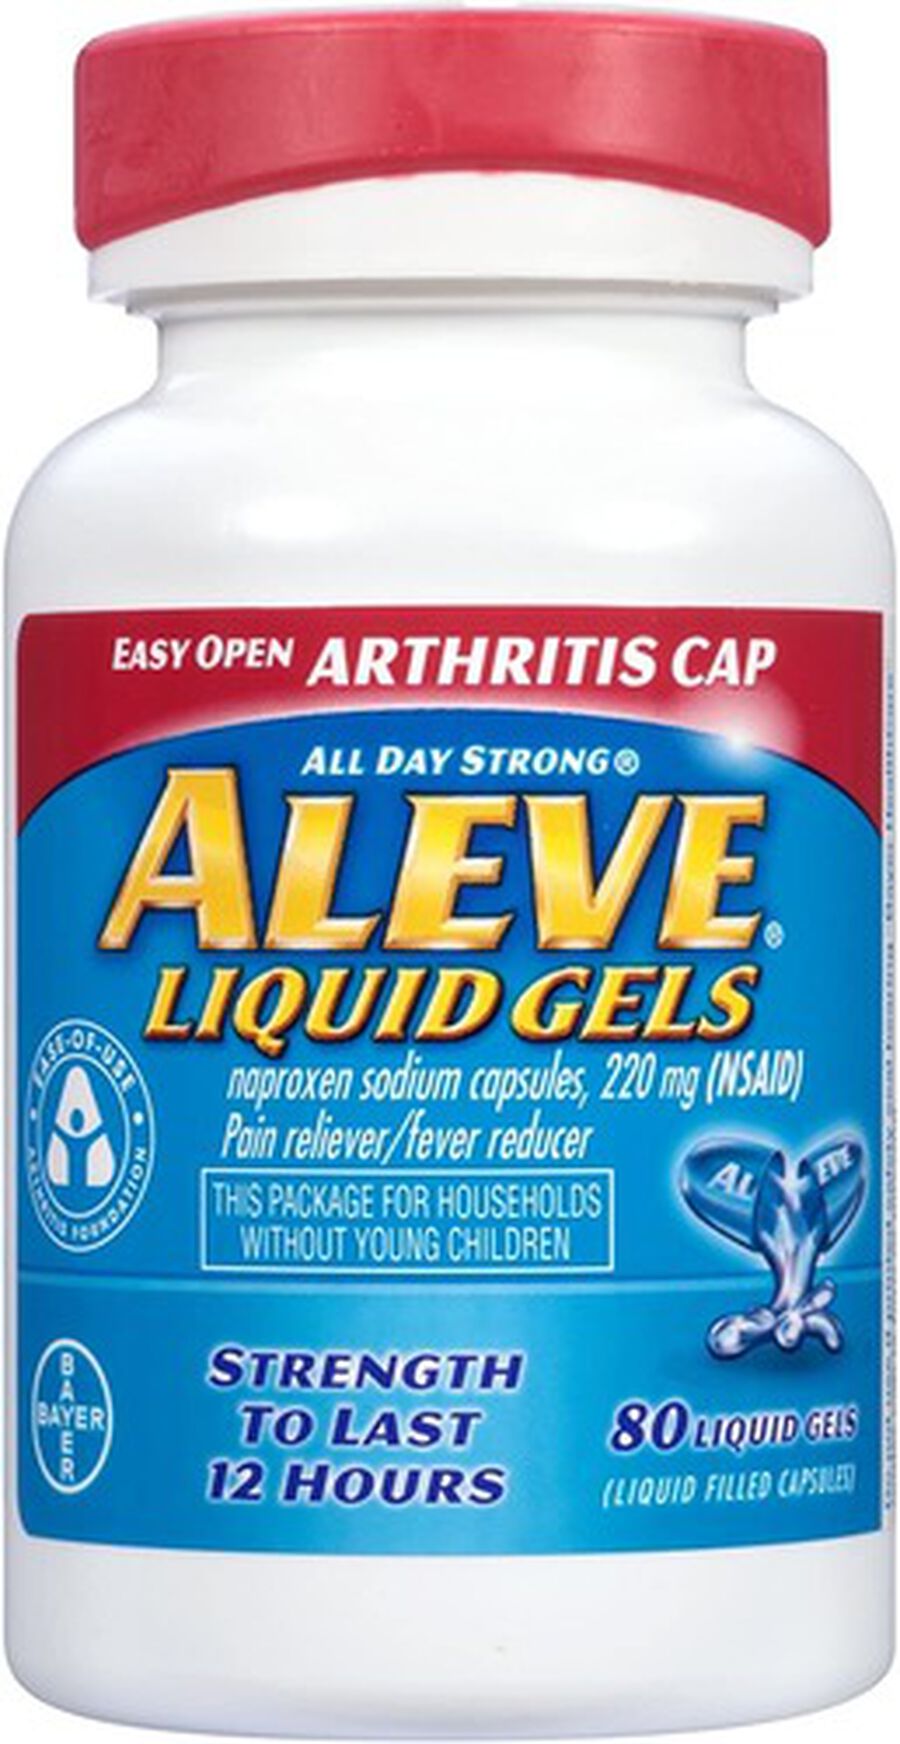 Aleve Arthritis Liquid Gels, Easy Open Cap, 80 ct., , large image number 4